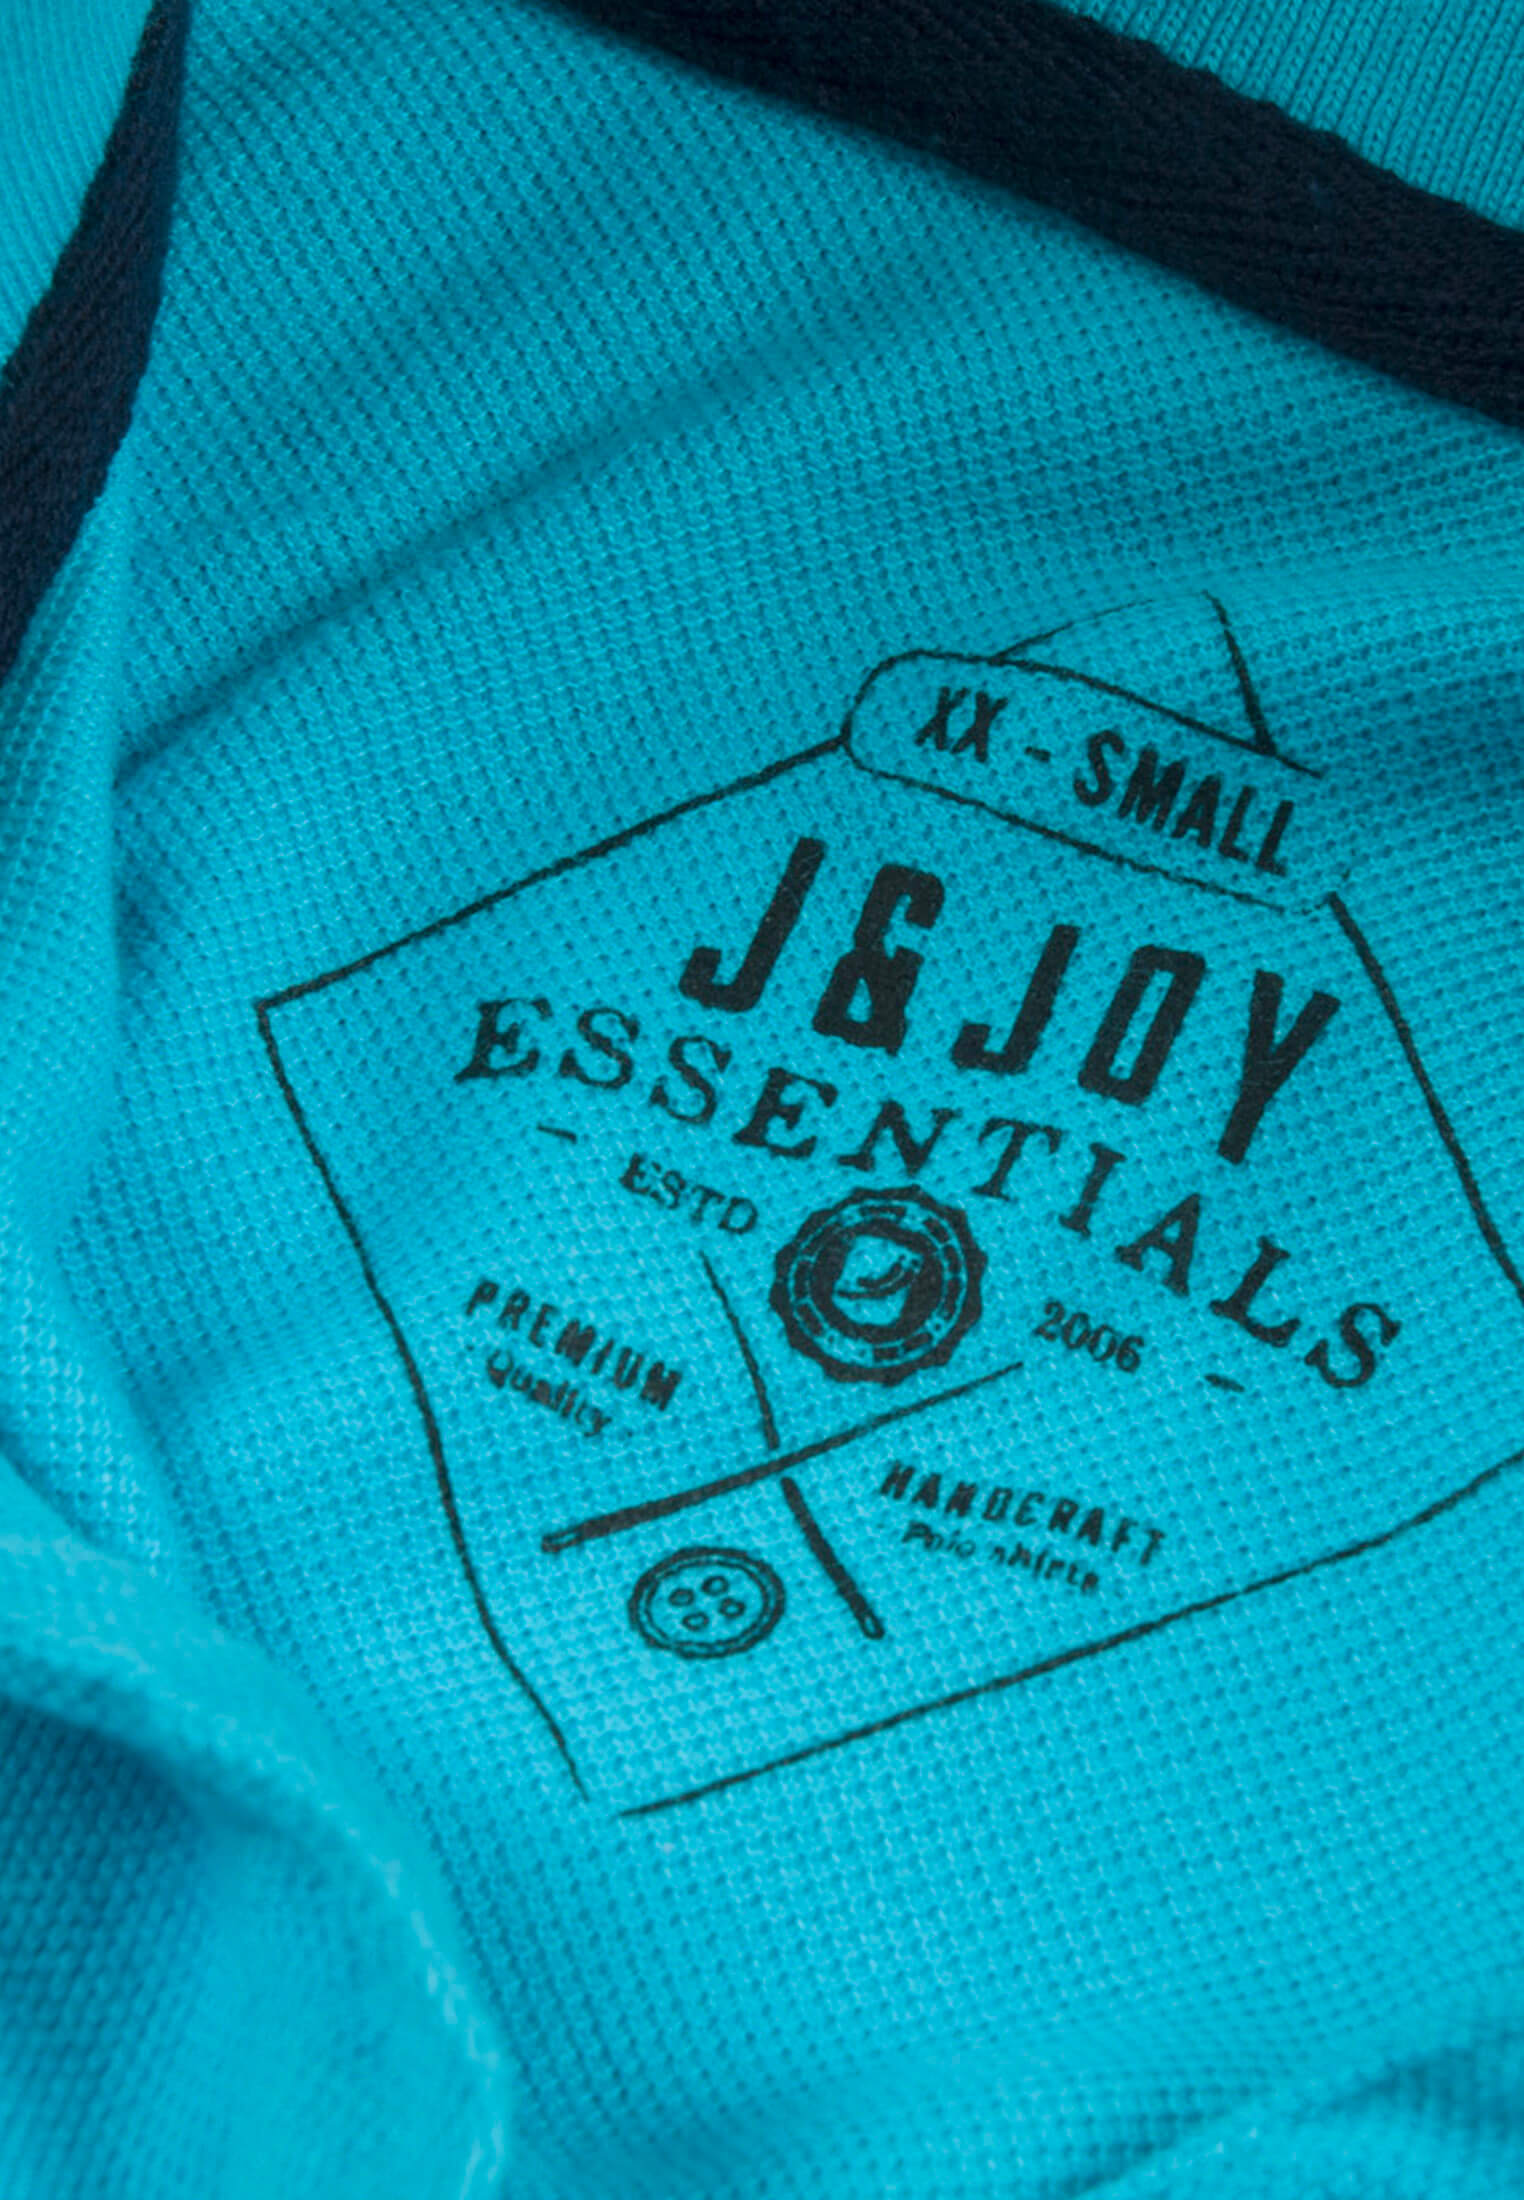 Polo Essentials Femme 03 Atollis Gear | J&JOY.